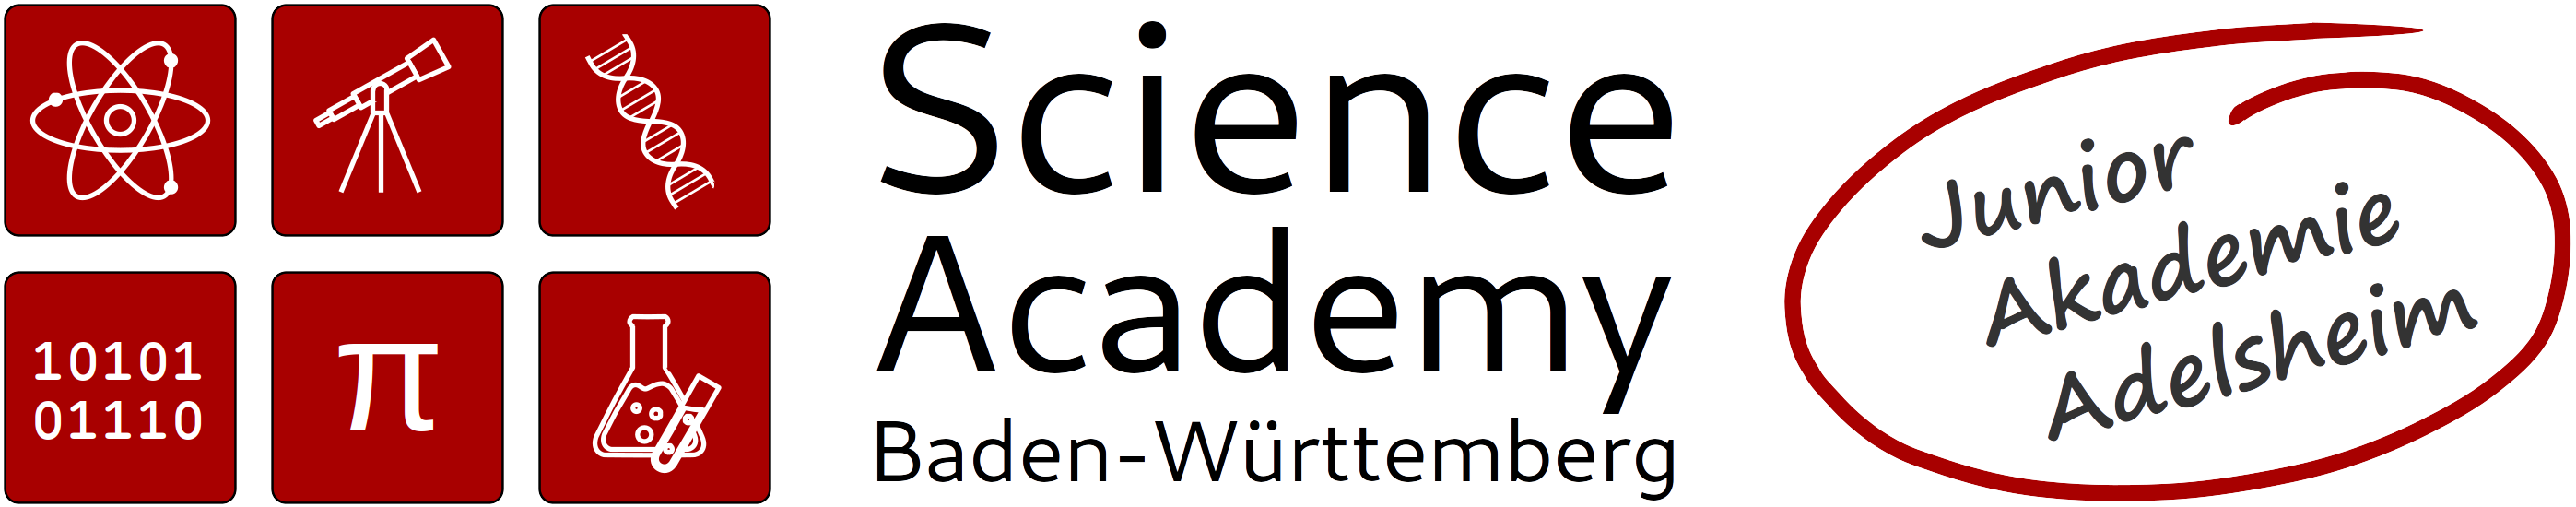 Science Academy Baden-Württemberg